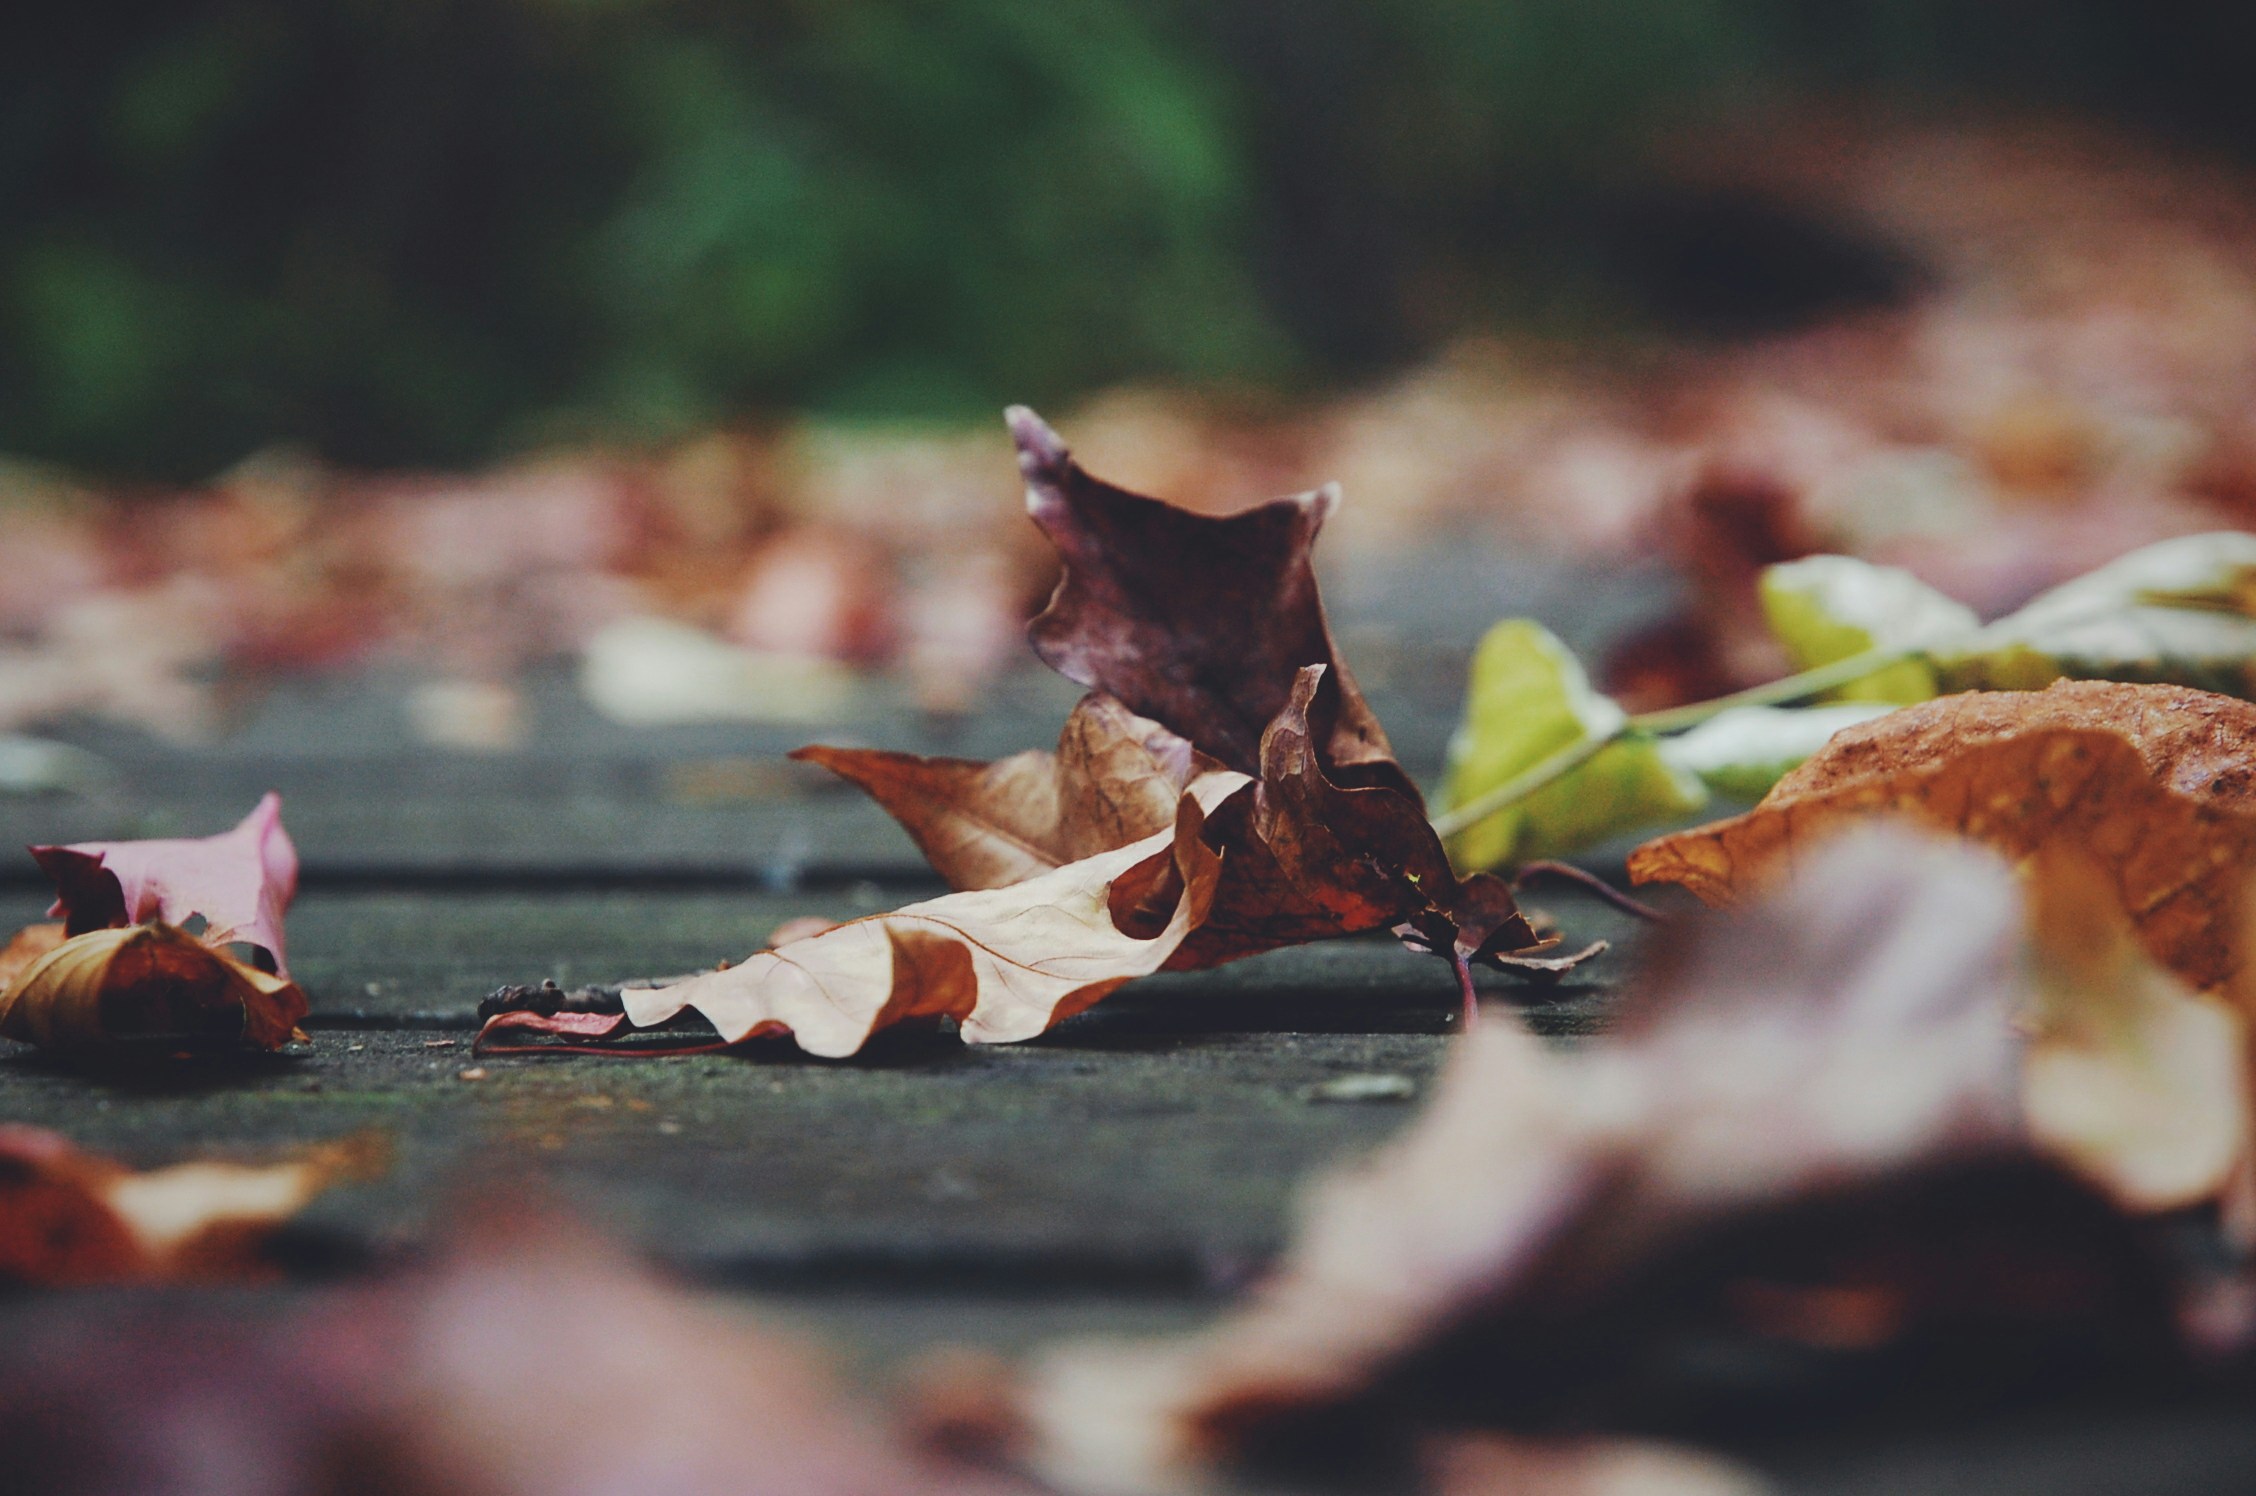 Many wonders lie under the leaves. Image credit: John Silliman